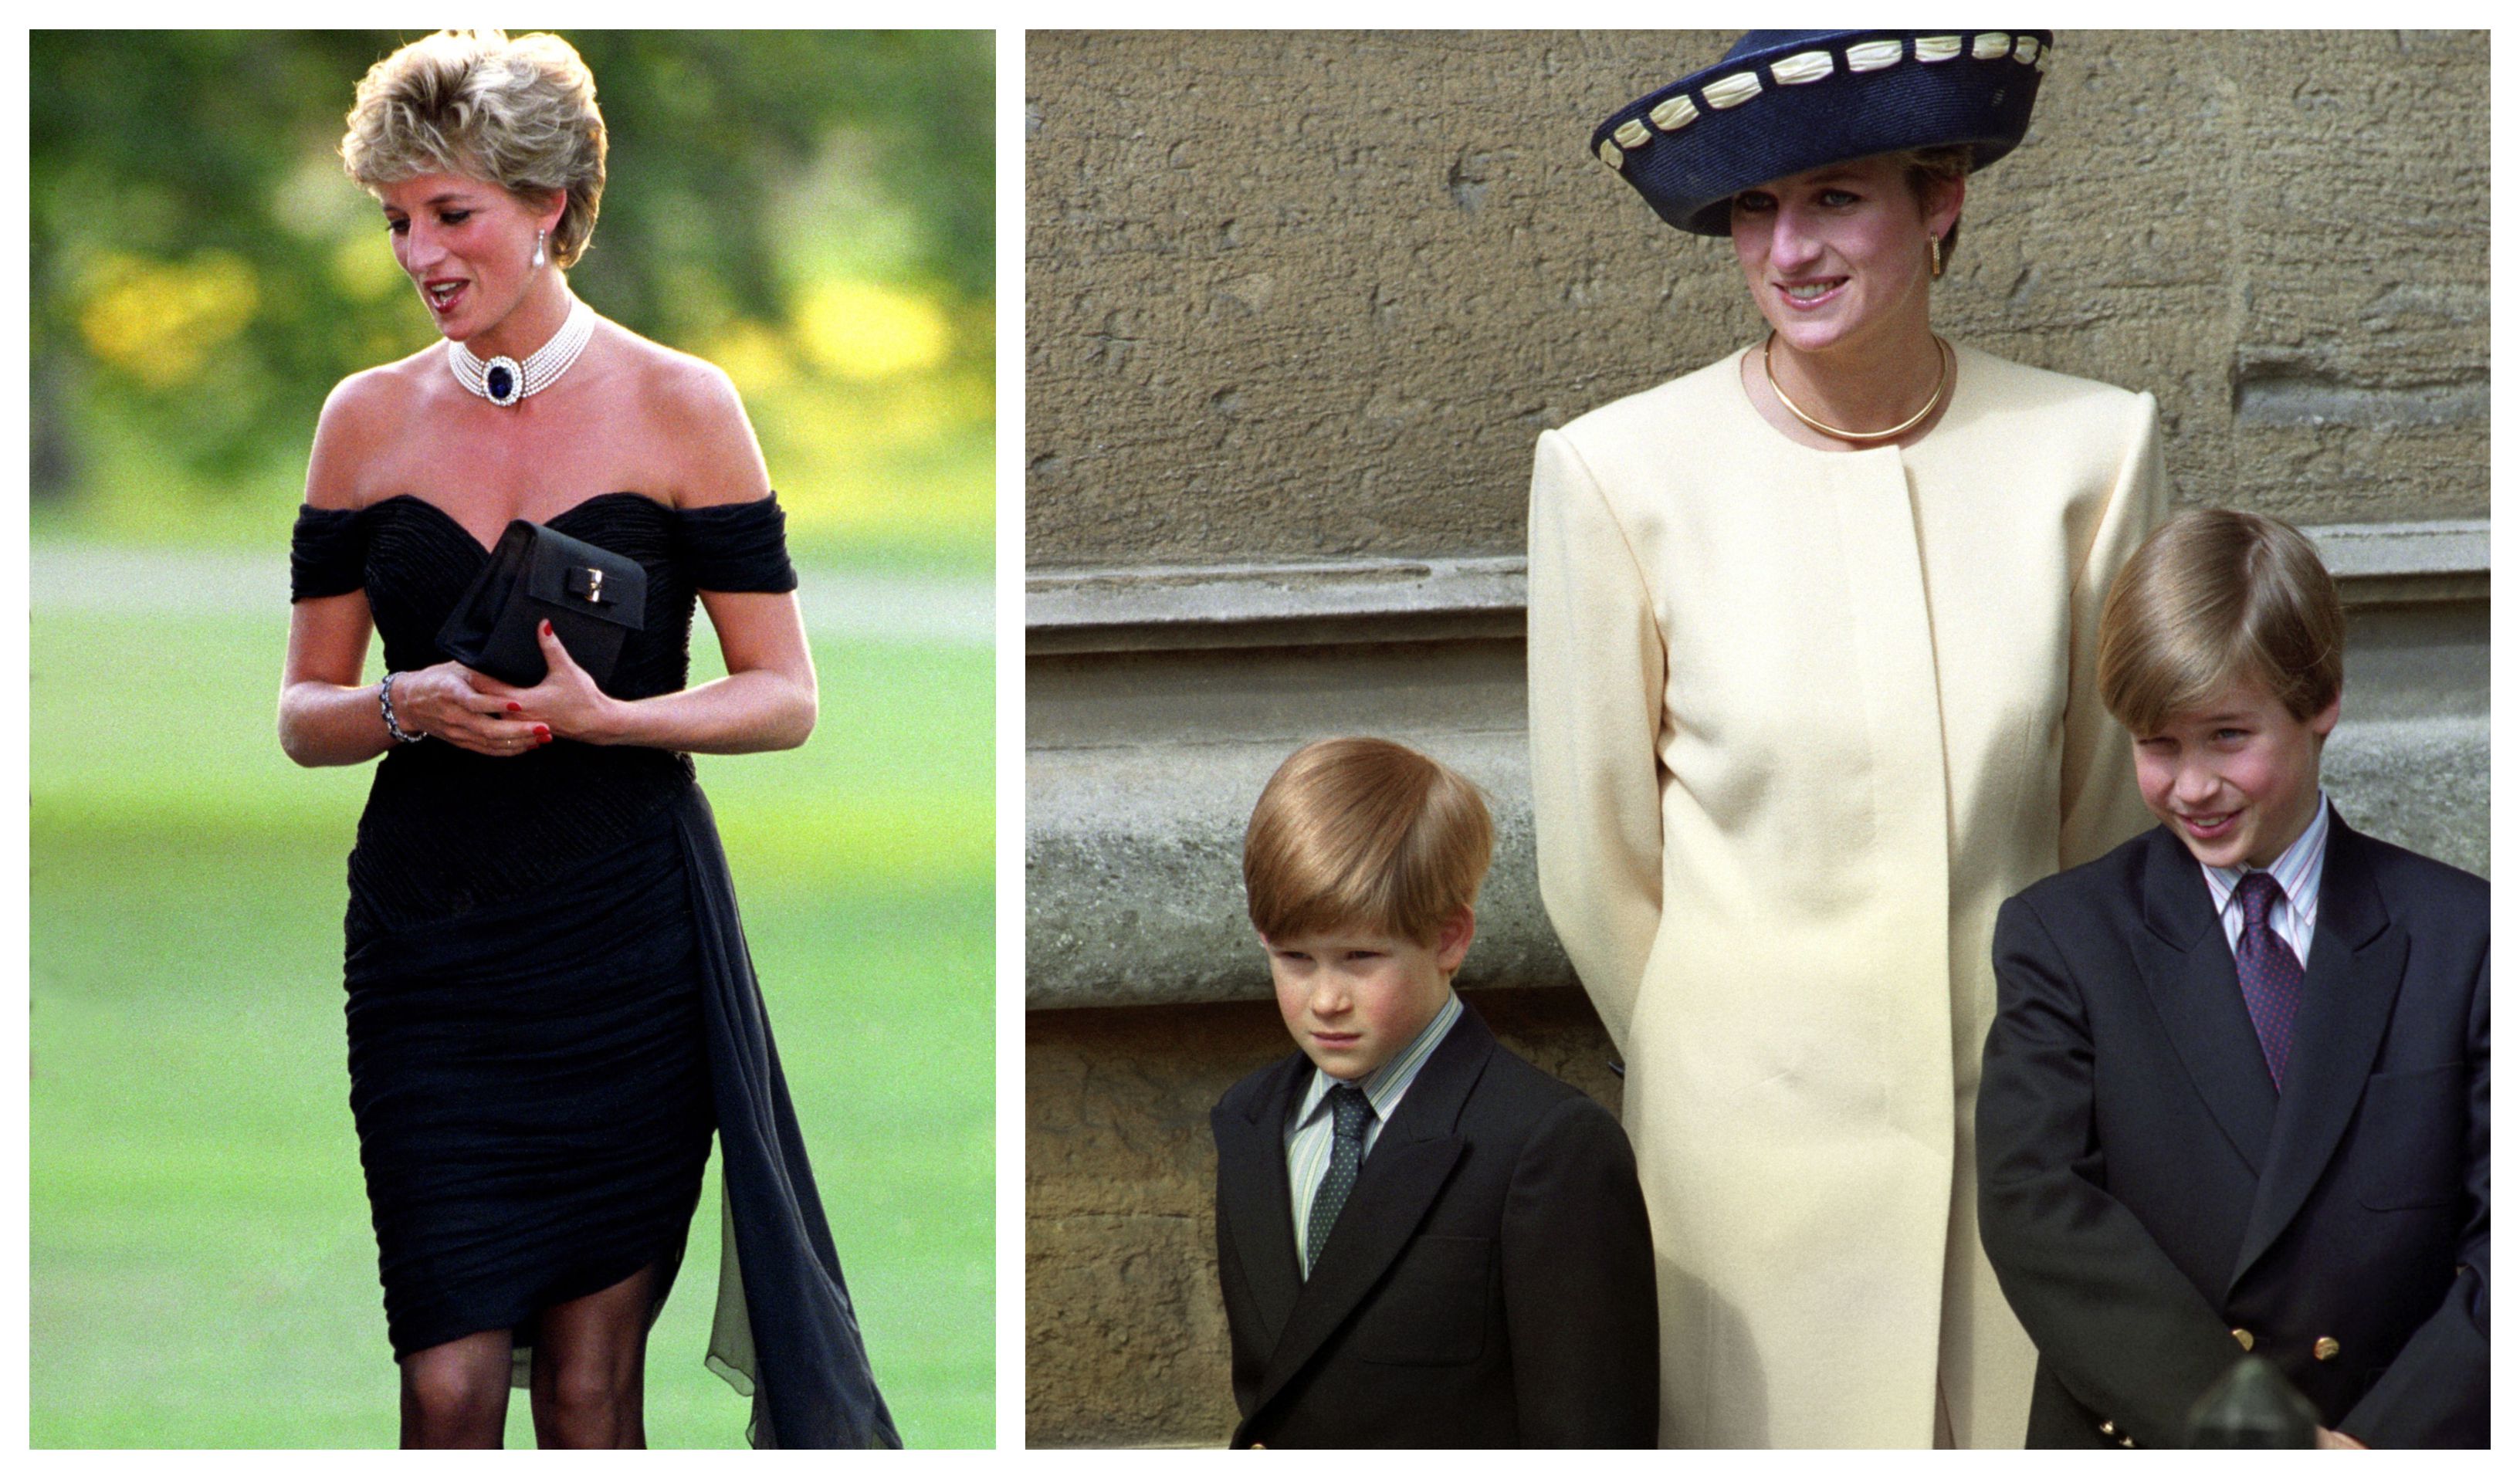 Omiljena princeza i ikona stila, Diana, danas bi proslavila 58. rođendan 